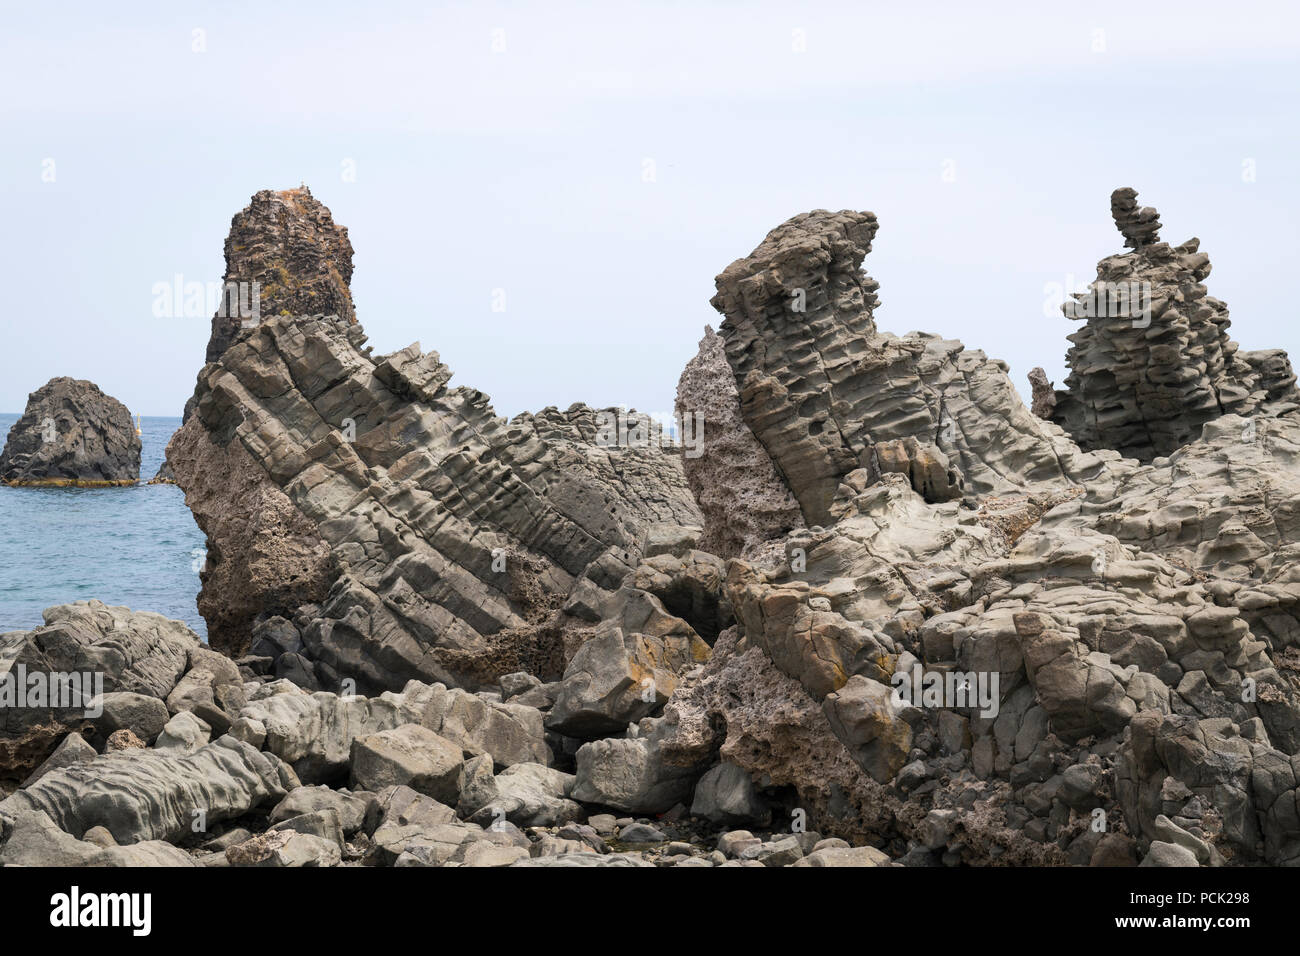 Italien Sizilien Catania Aci Trezza Faraglioni Basaltfelsen die Isole Dei Ciclopt Naturschutzgebiet von Homer Ruhm Stockfoto